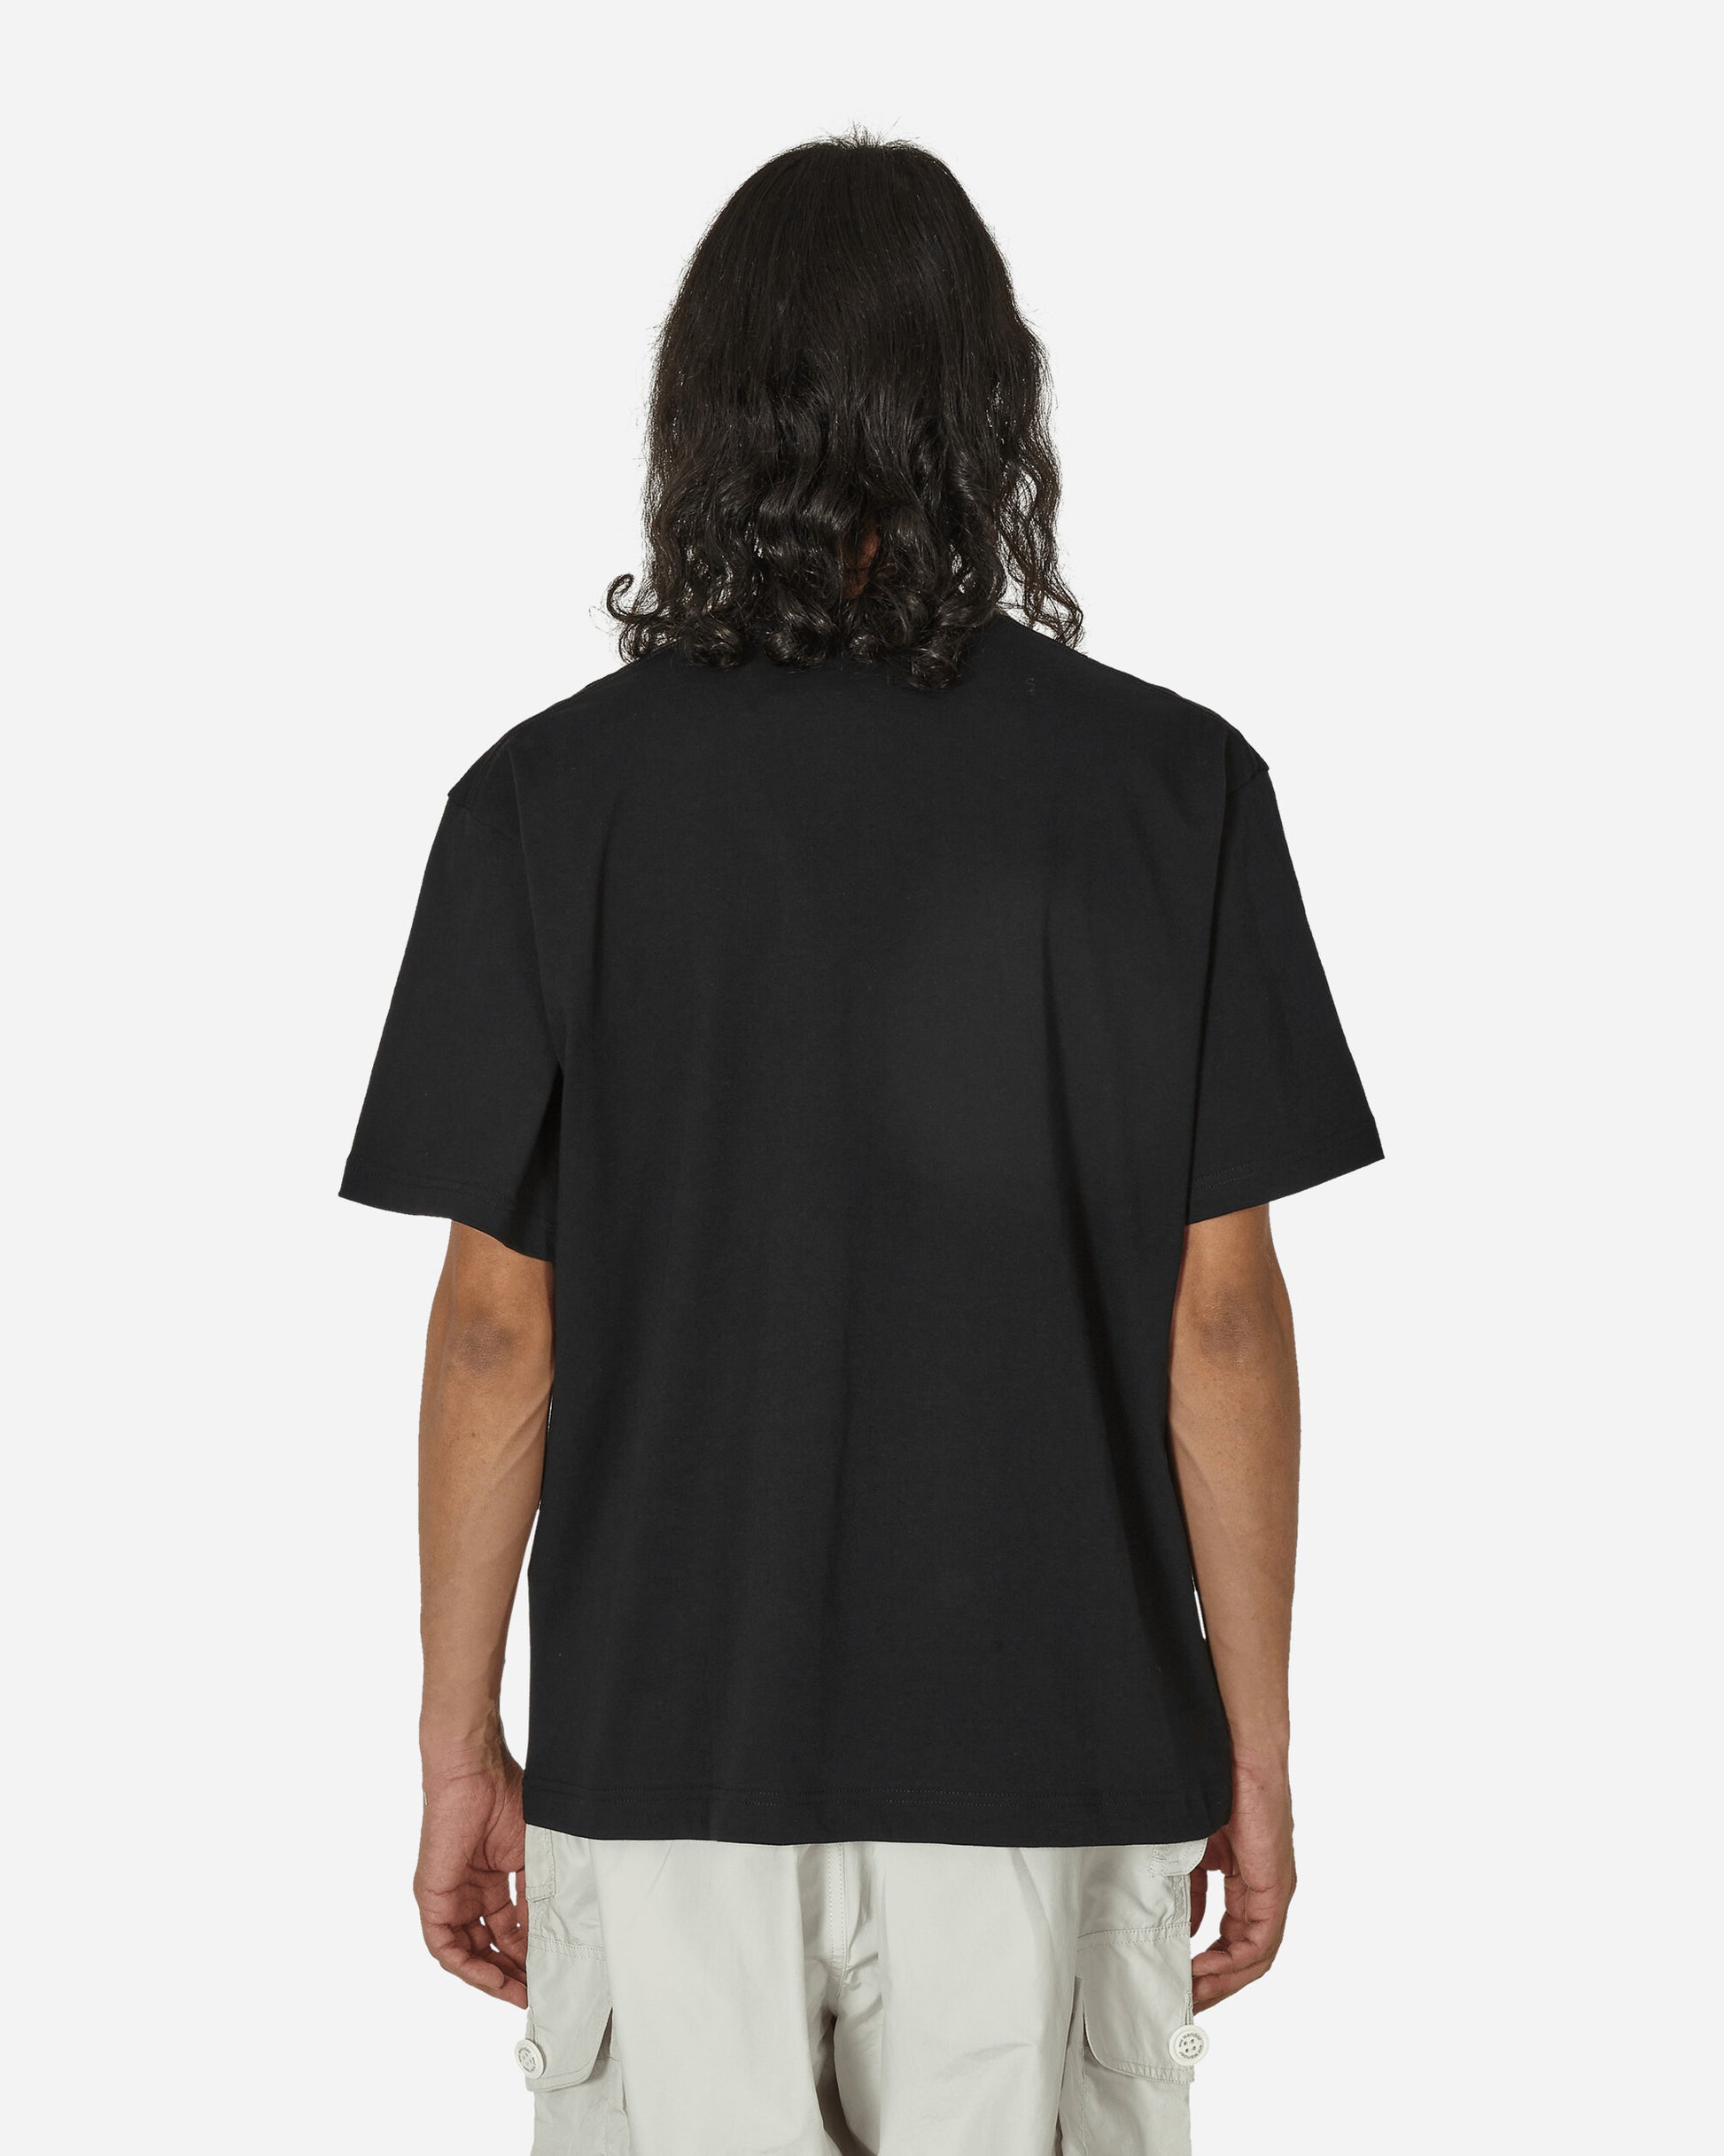 and wander Noizy Logo Printed T Black T-Shirts Shortsleeve 5744184184 010